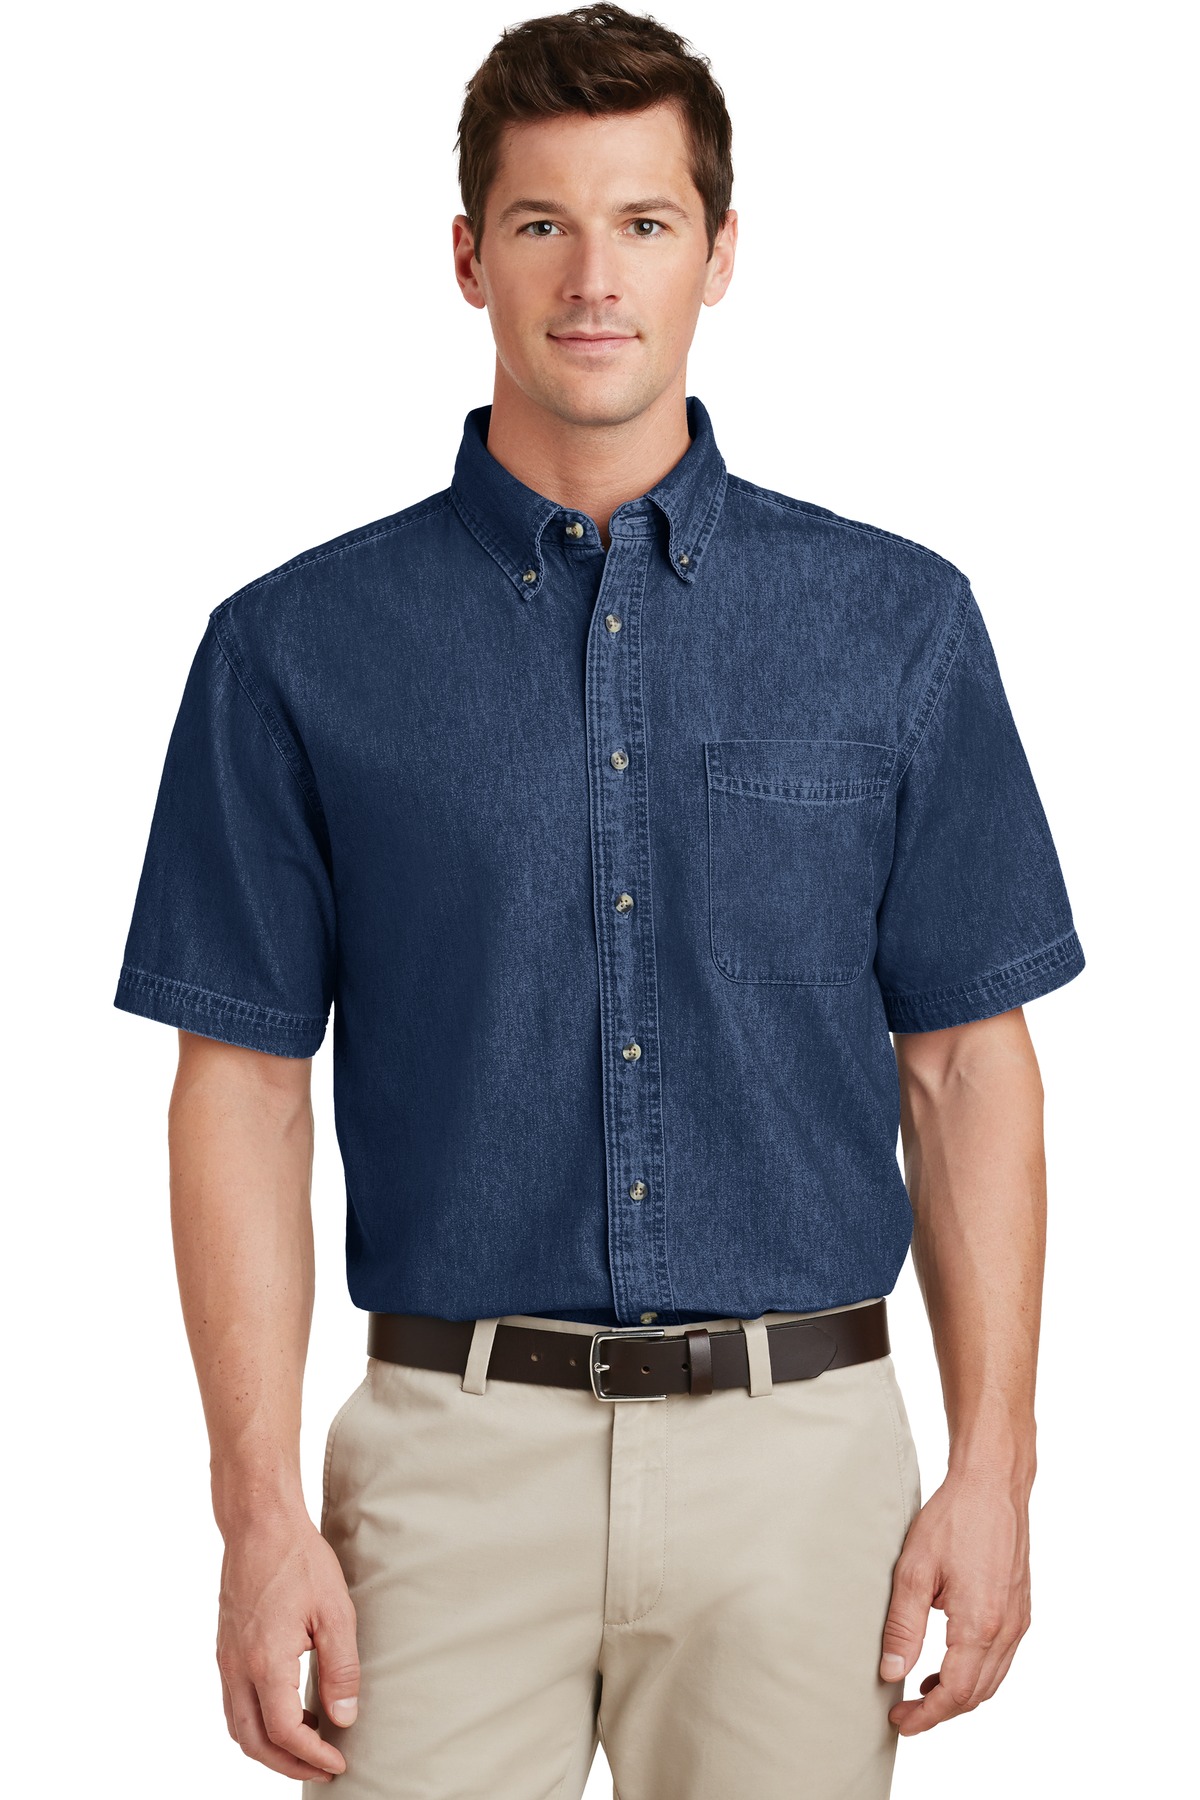 "Port & Company Short Sleeve Value Denim Shirt (SP11) Ink Blue, XL" - image 1 of 6